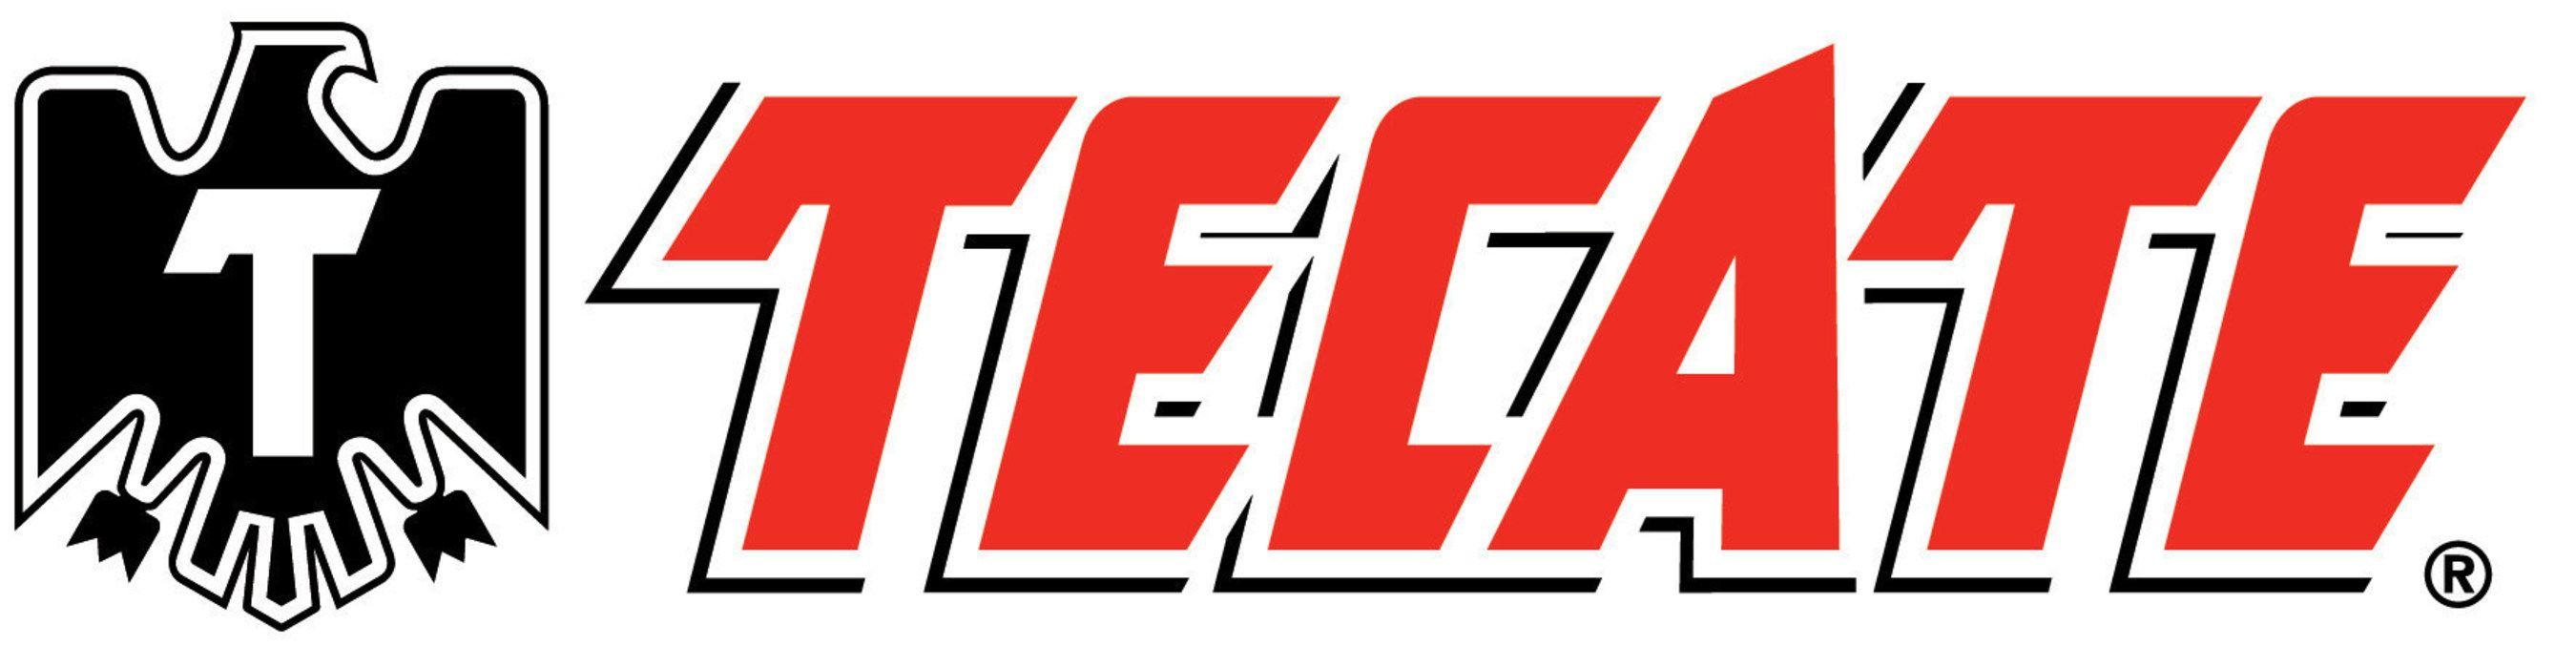 Tecate Logo - Tecate Logos